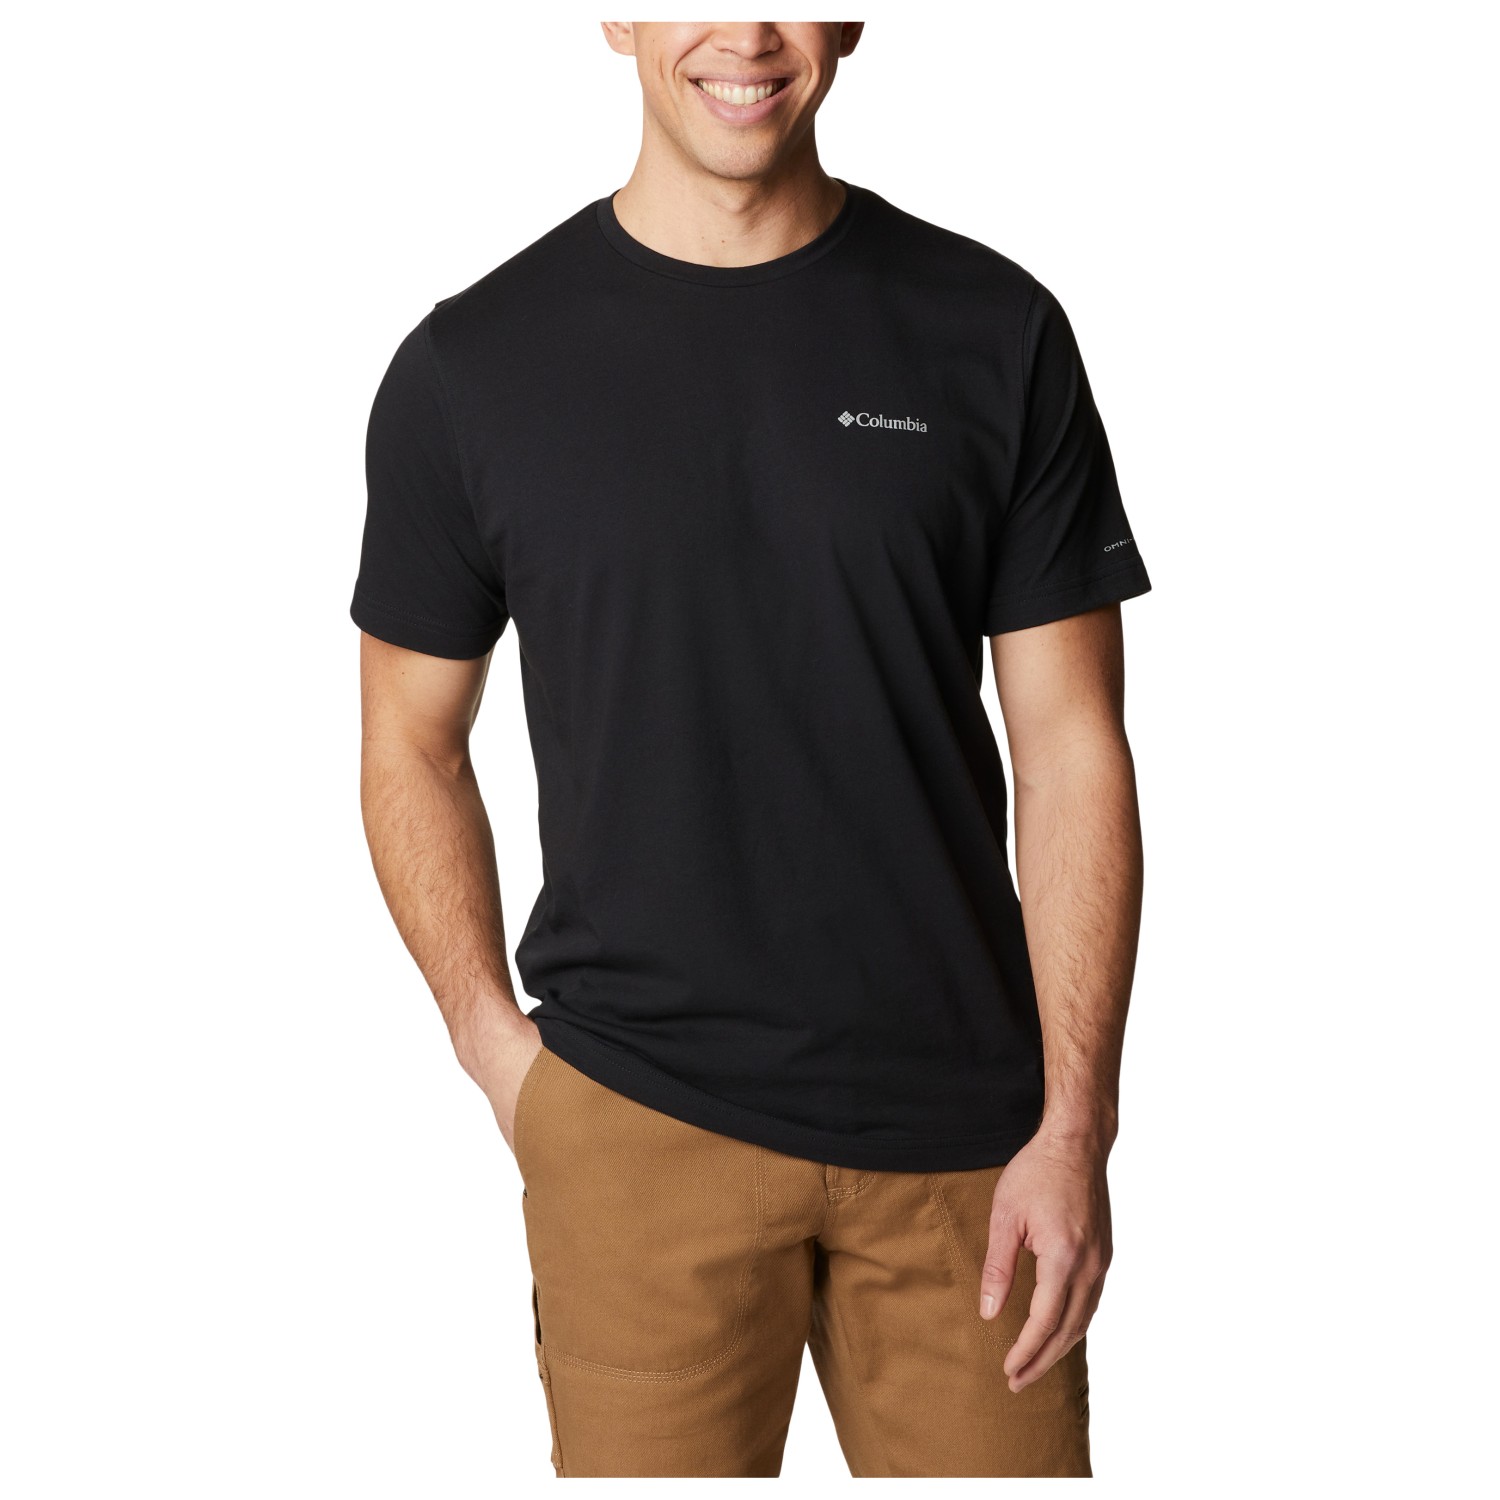 Функциональная рубашка Columbia Thistletown Hills Short Sleeve, черный